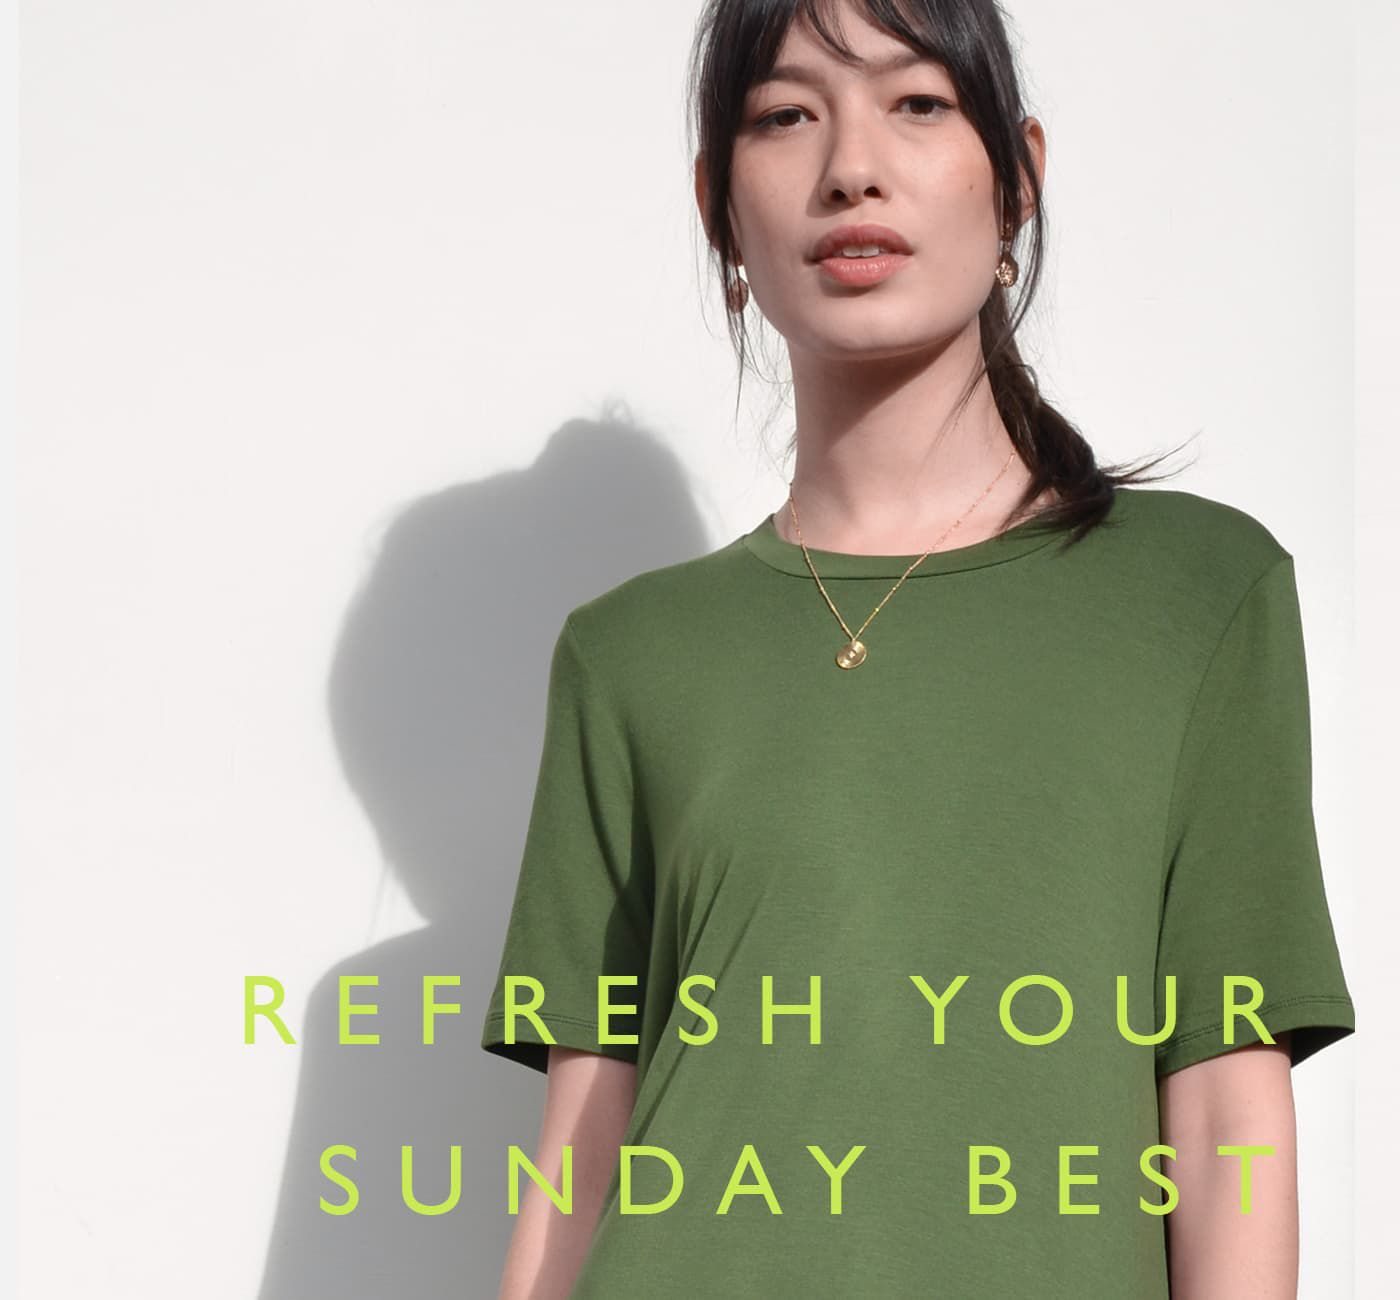 Refresh your Sunday best 